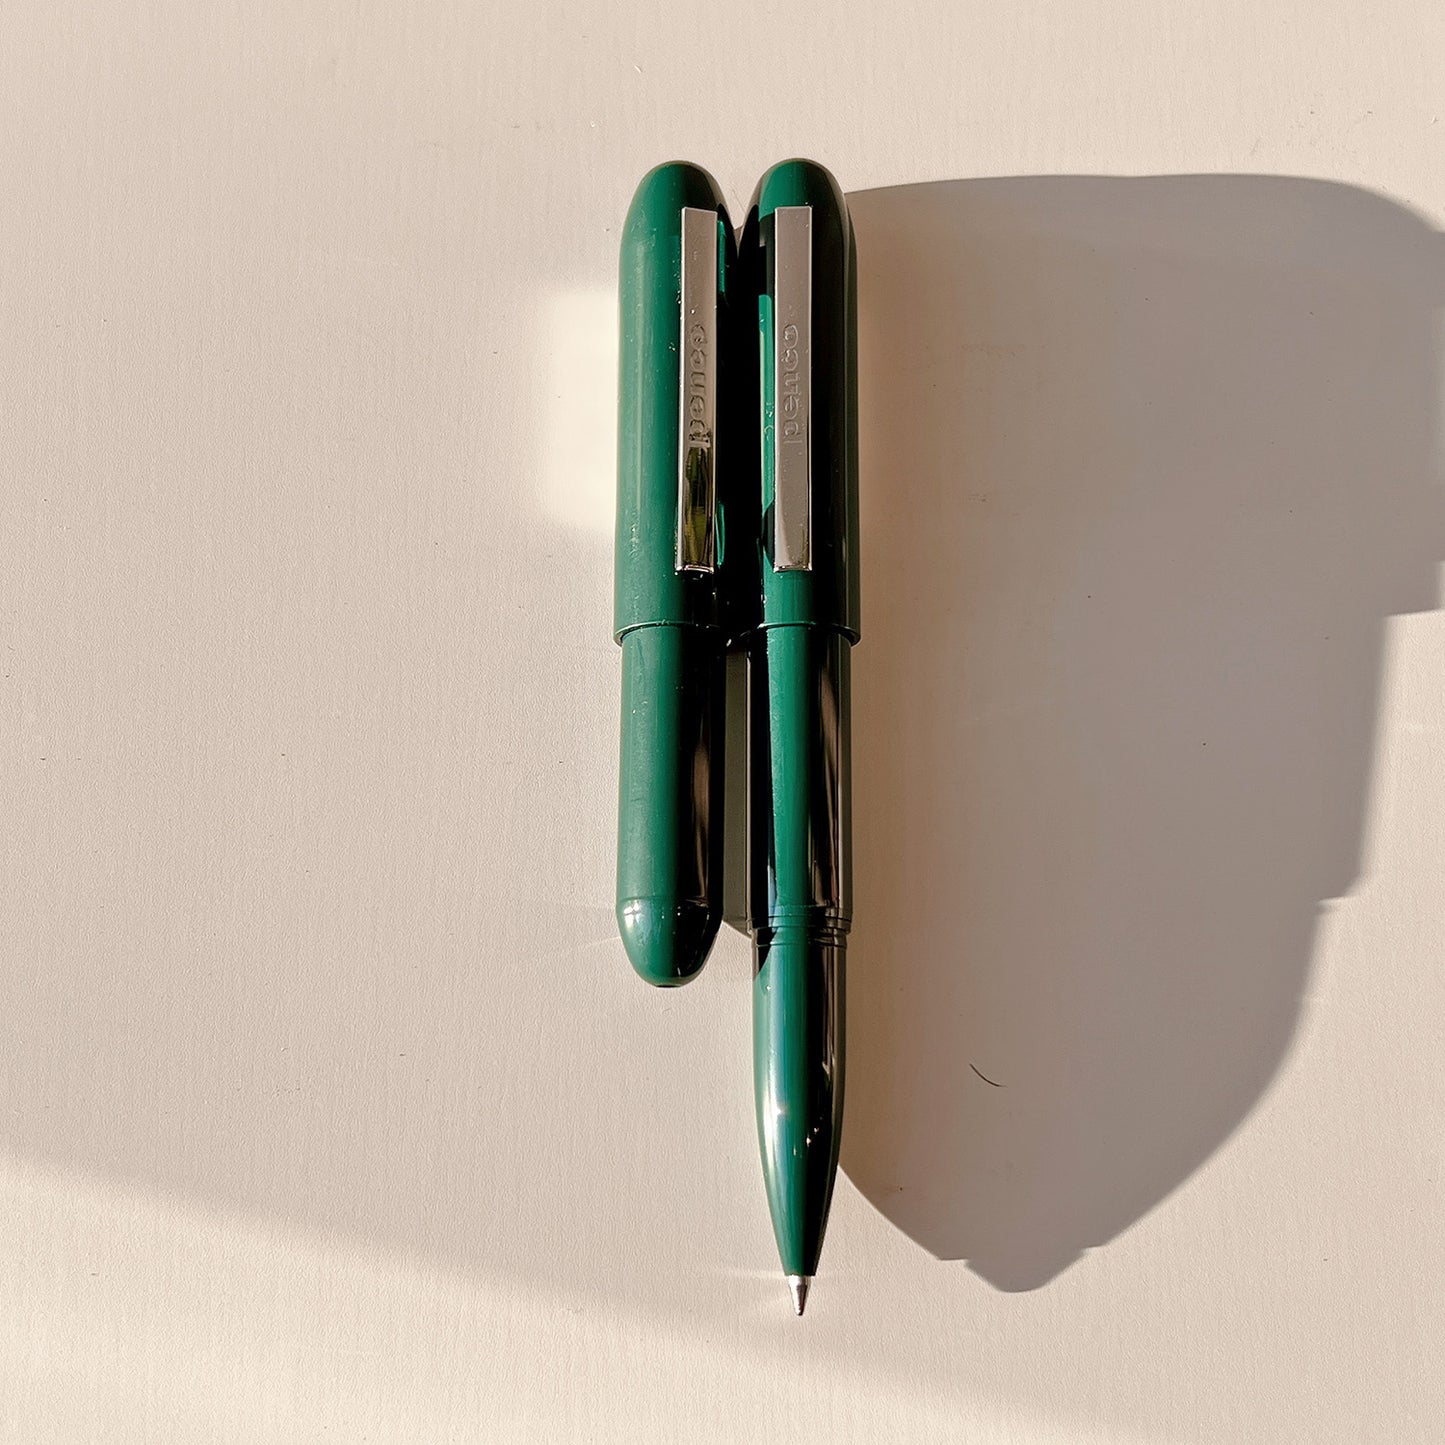 Bullet Ballpoint Pen Light - Dark Green